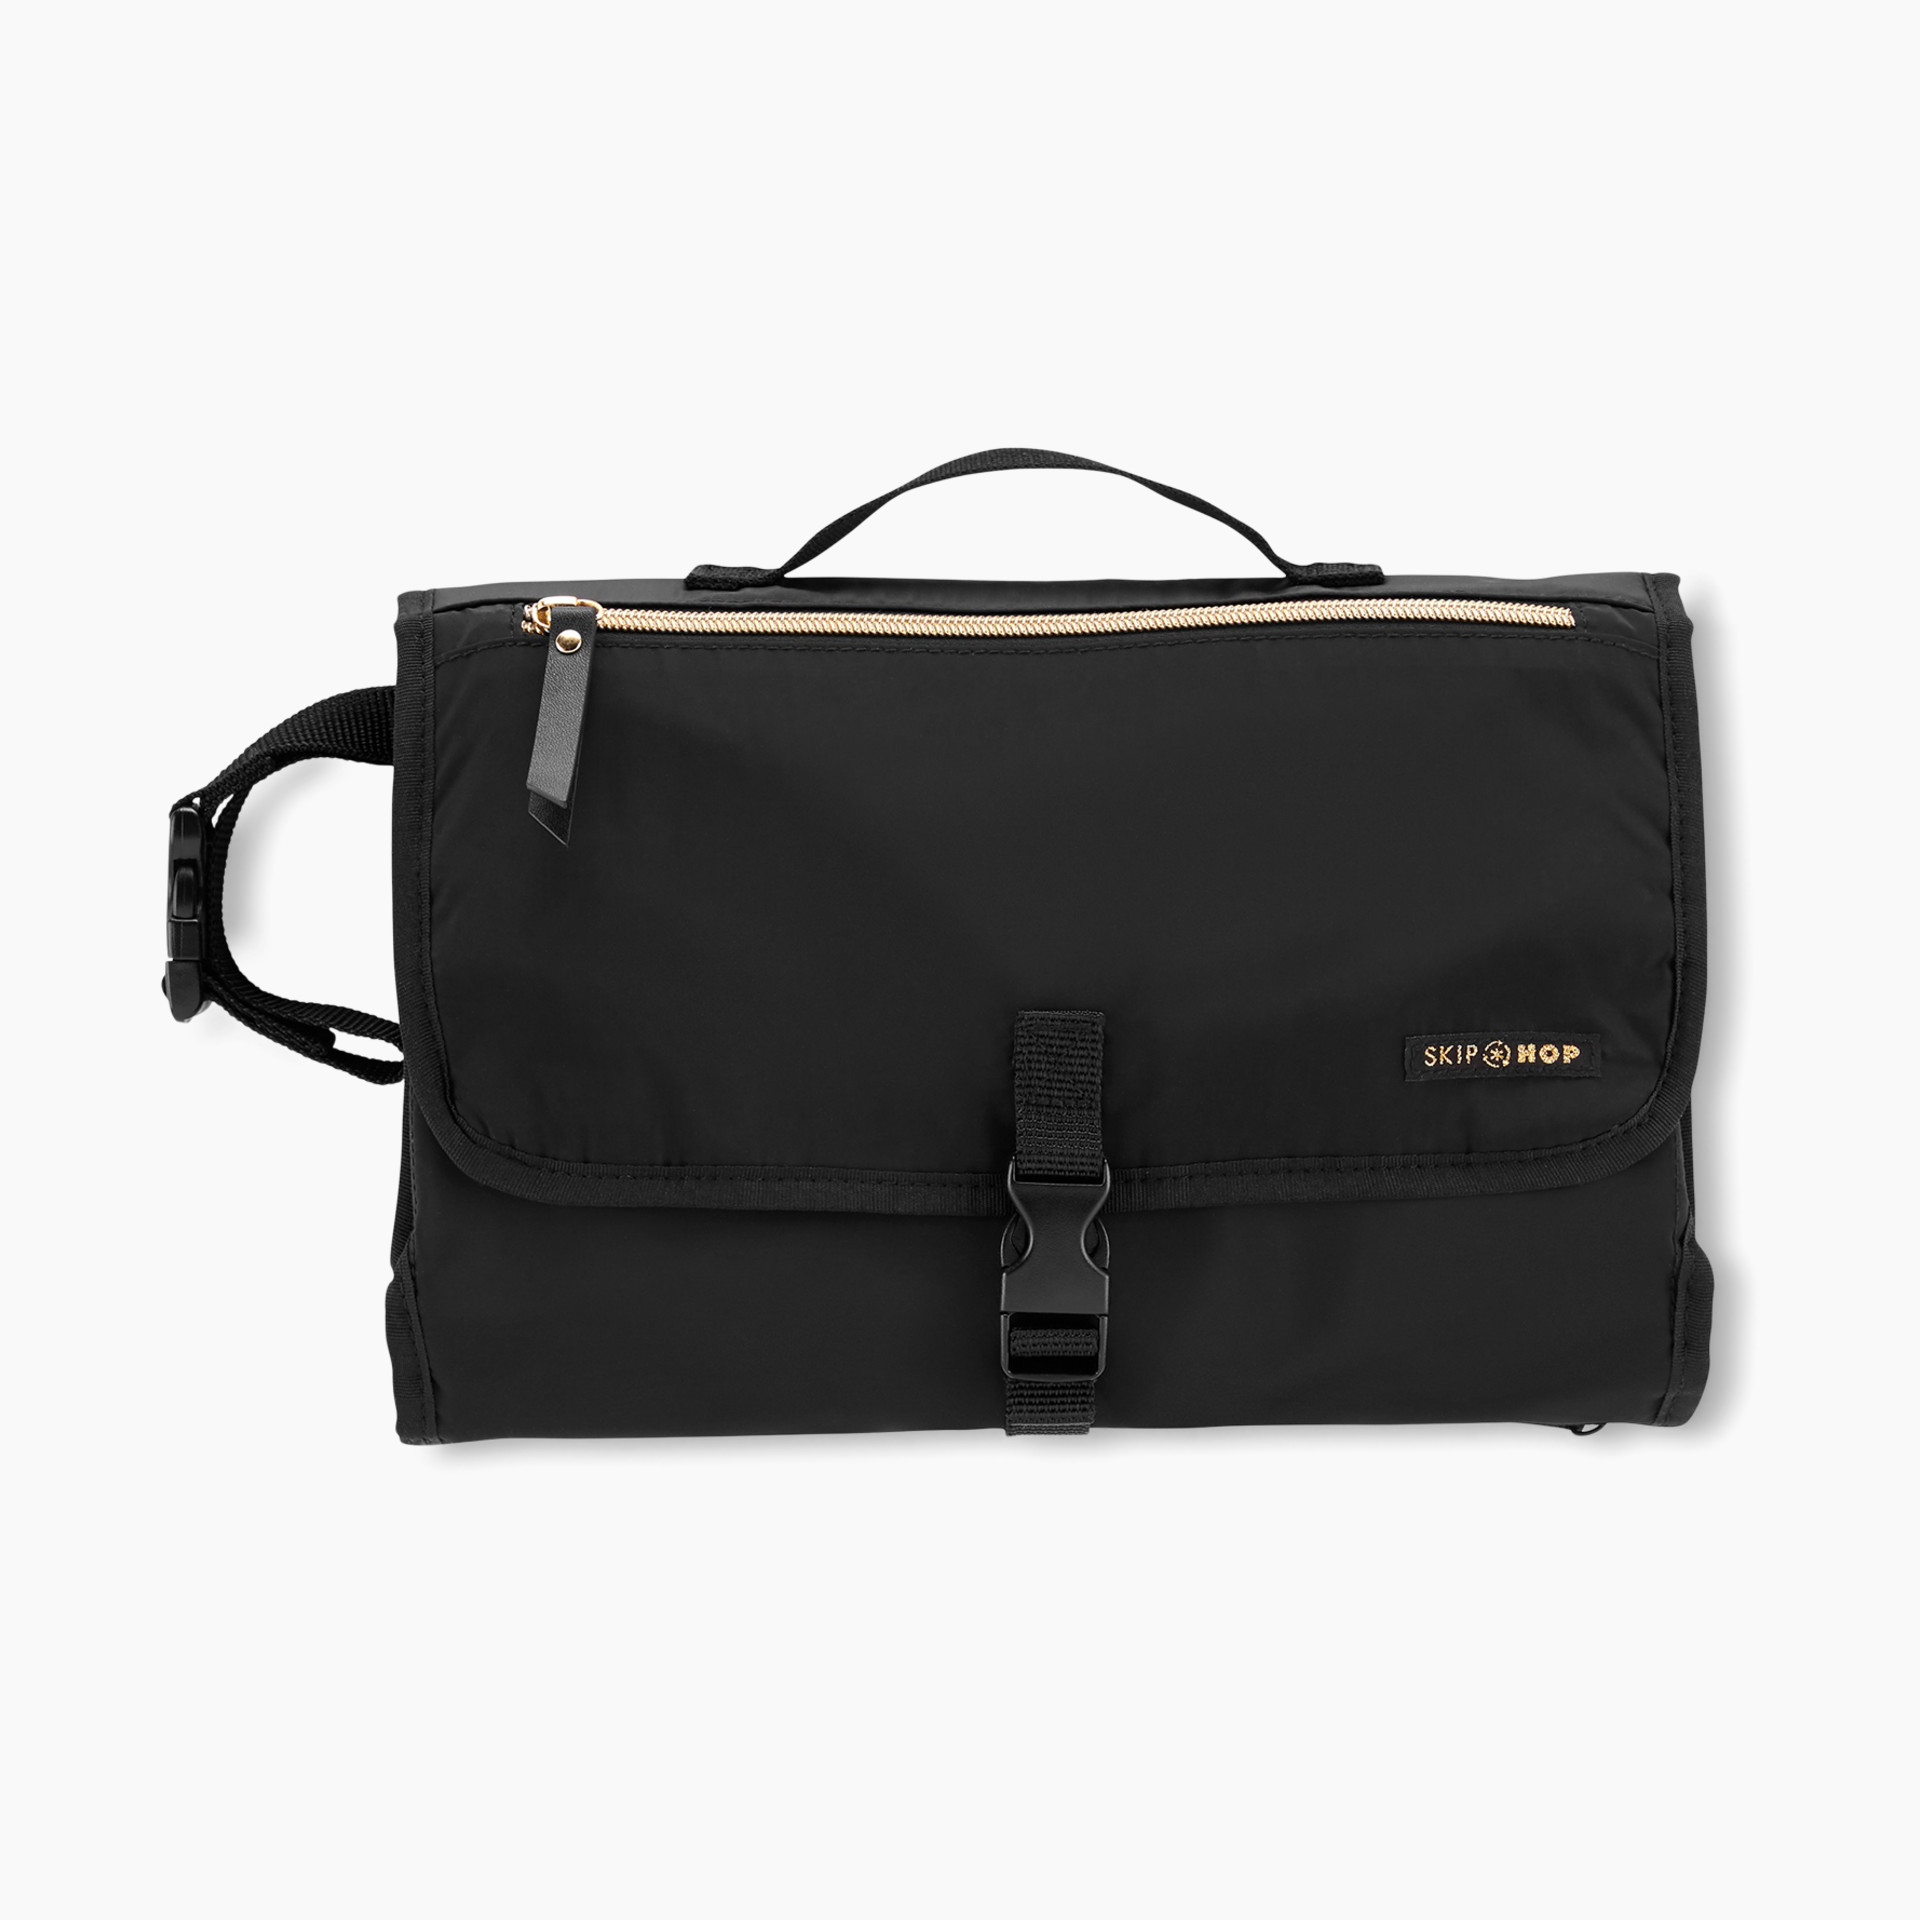 Envi Luxe Backpack Diaper Bag - Black